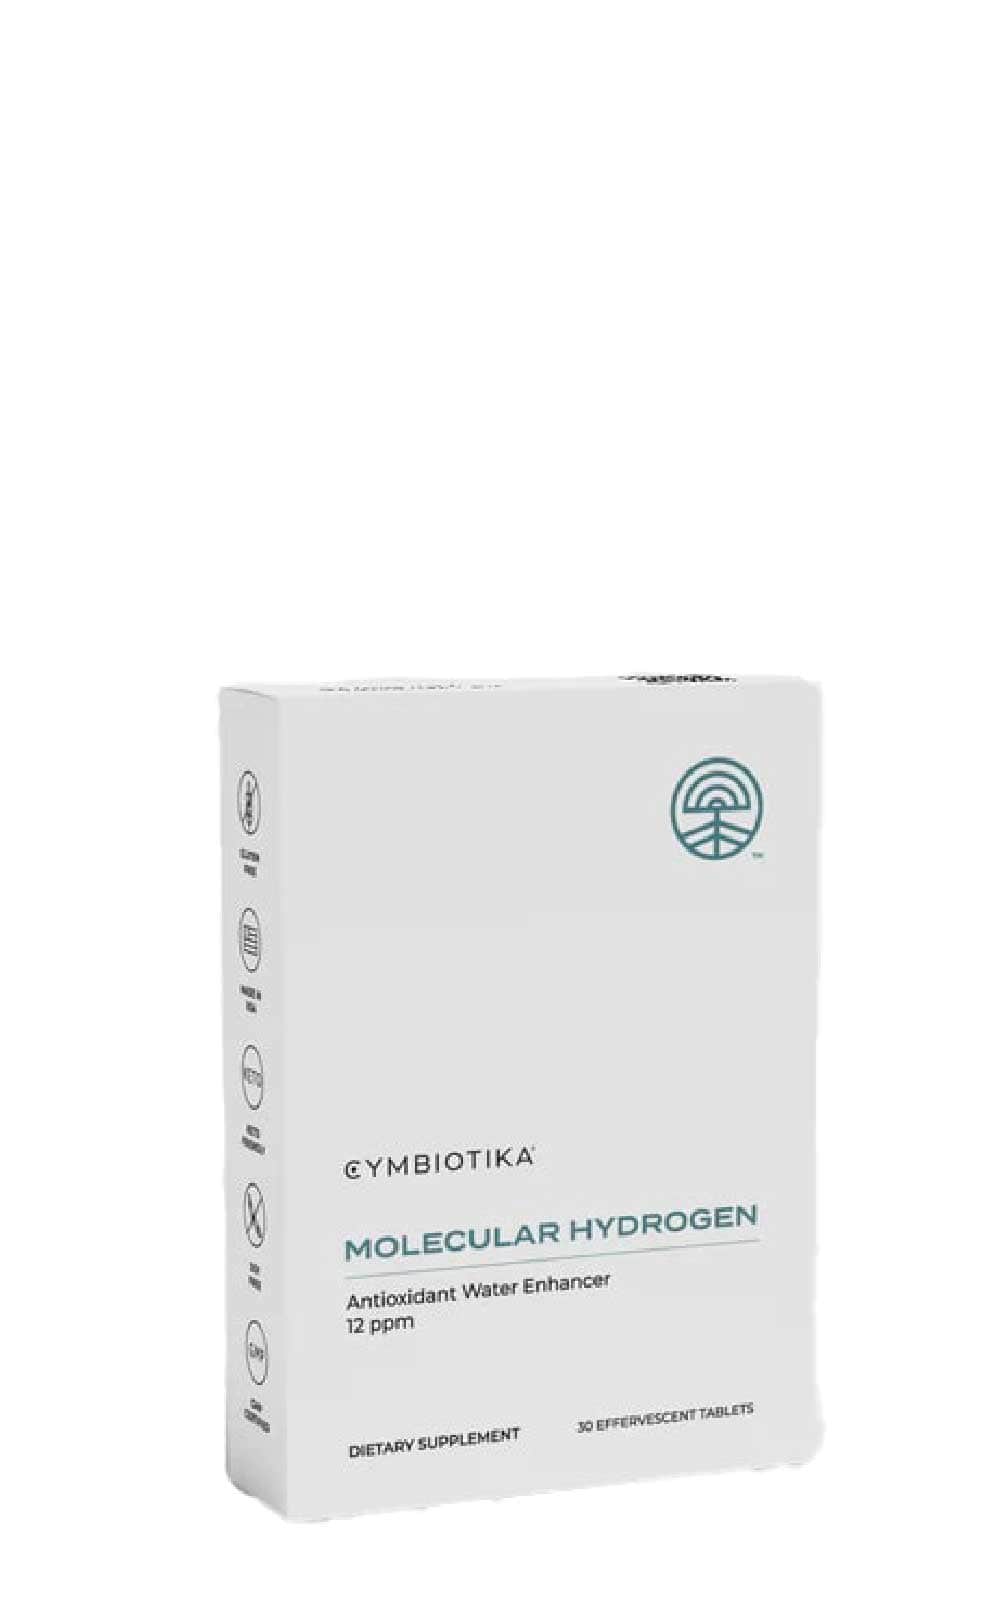 Buy Cymbiotika Molecular Hydrogen at LiveHelfi